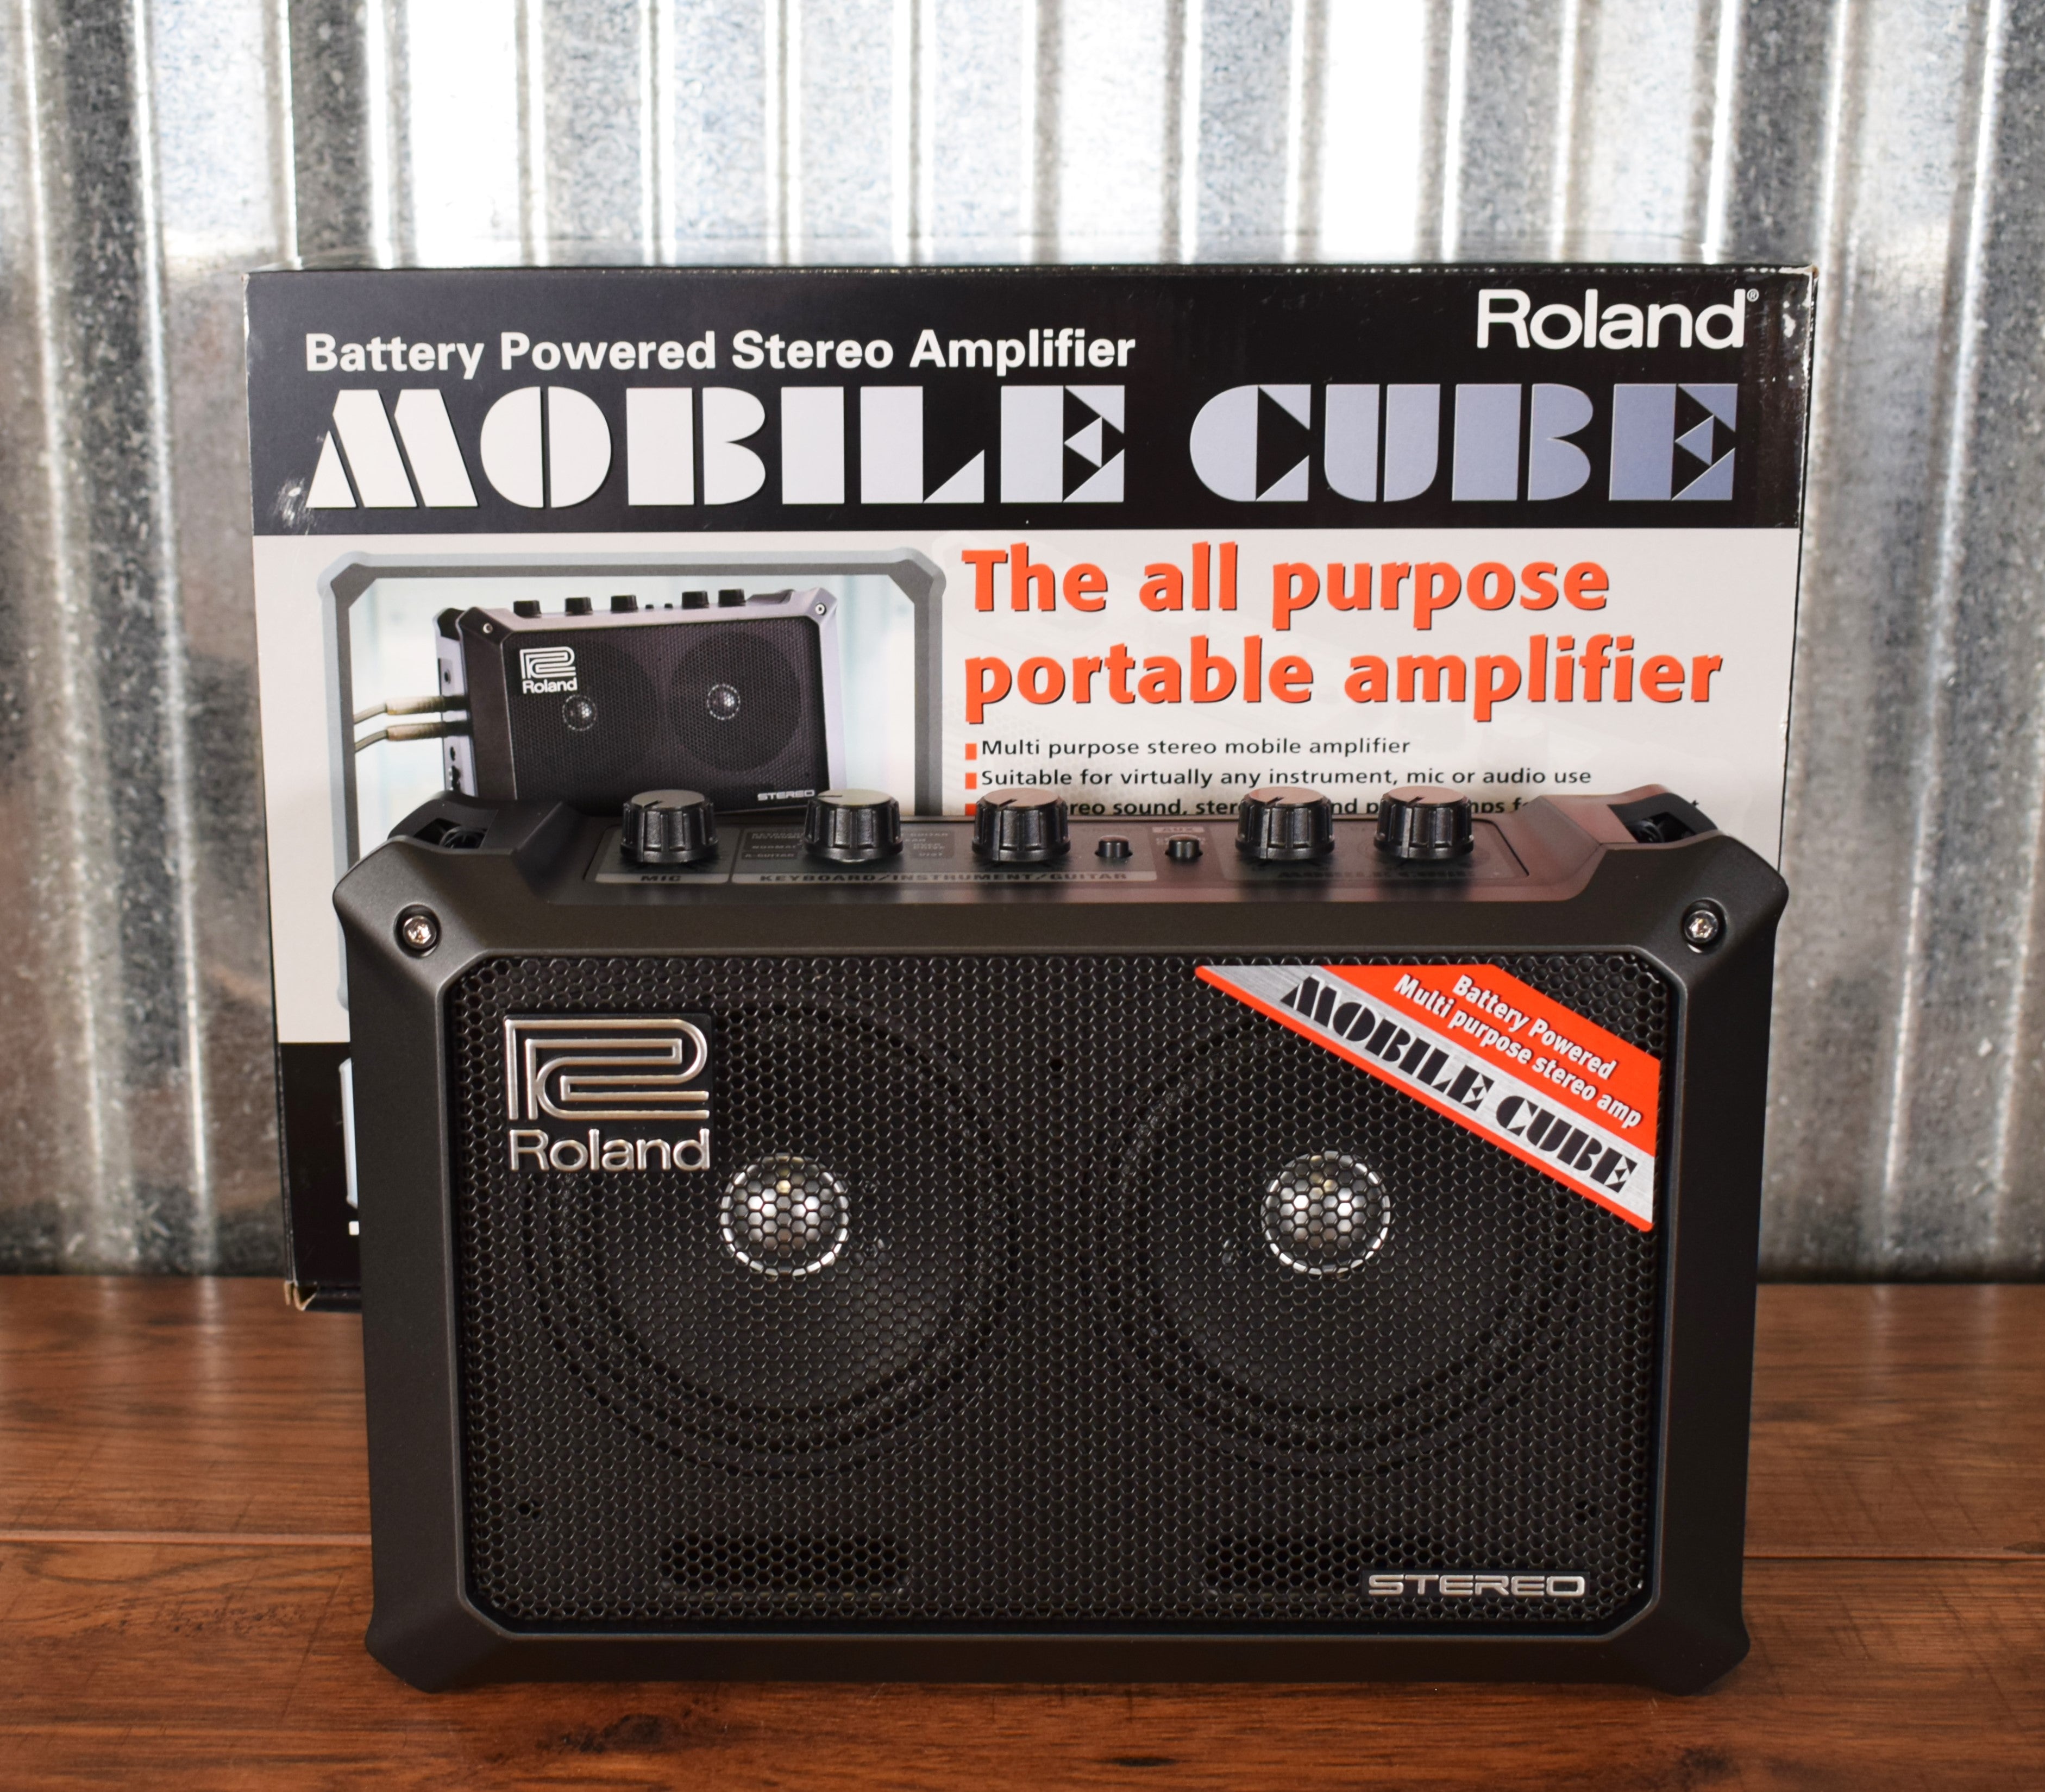 Roland Mobile Cube 2x4